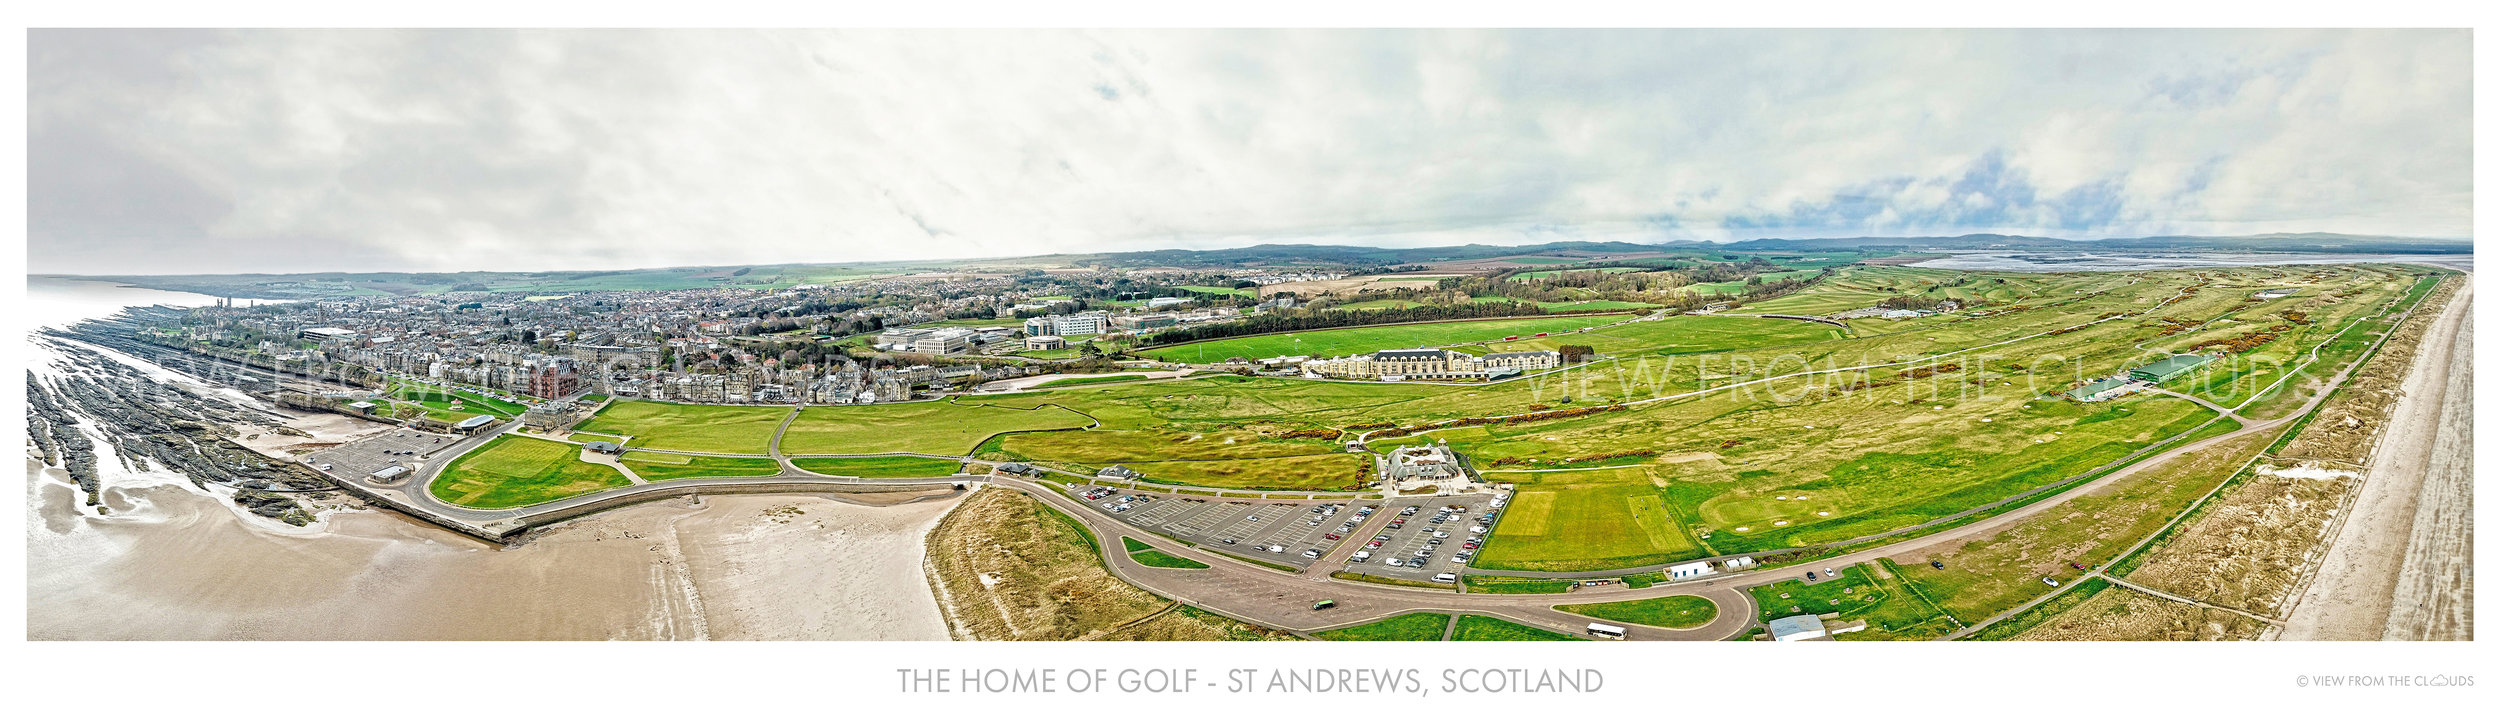 The_Home_of_Golf-WM.jpg